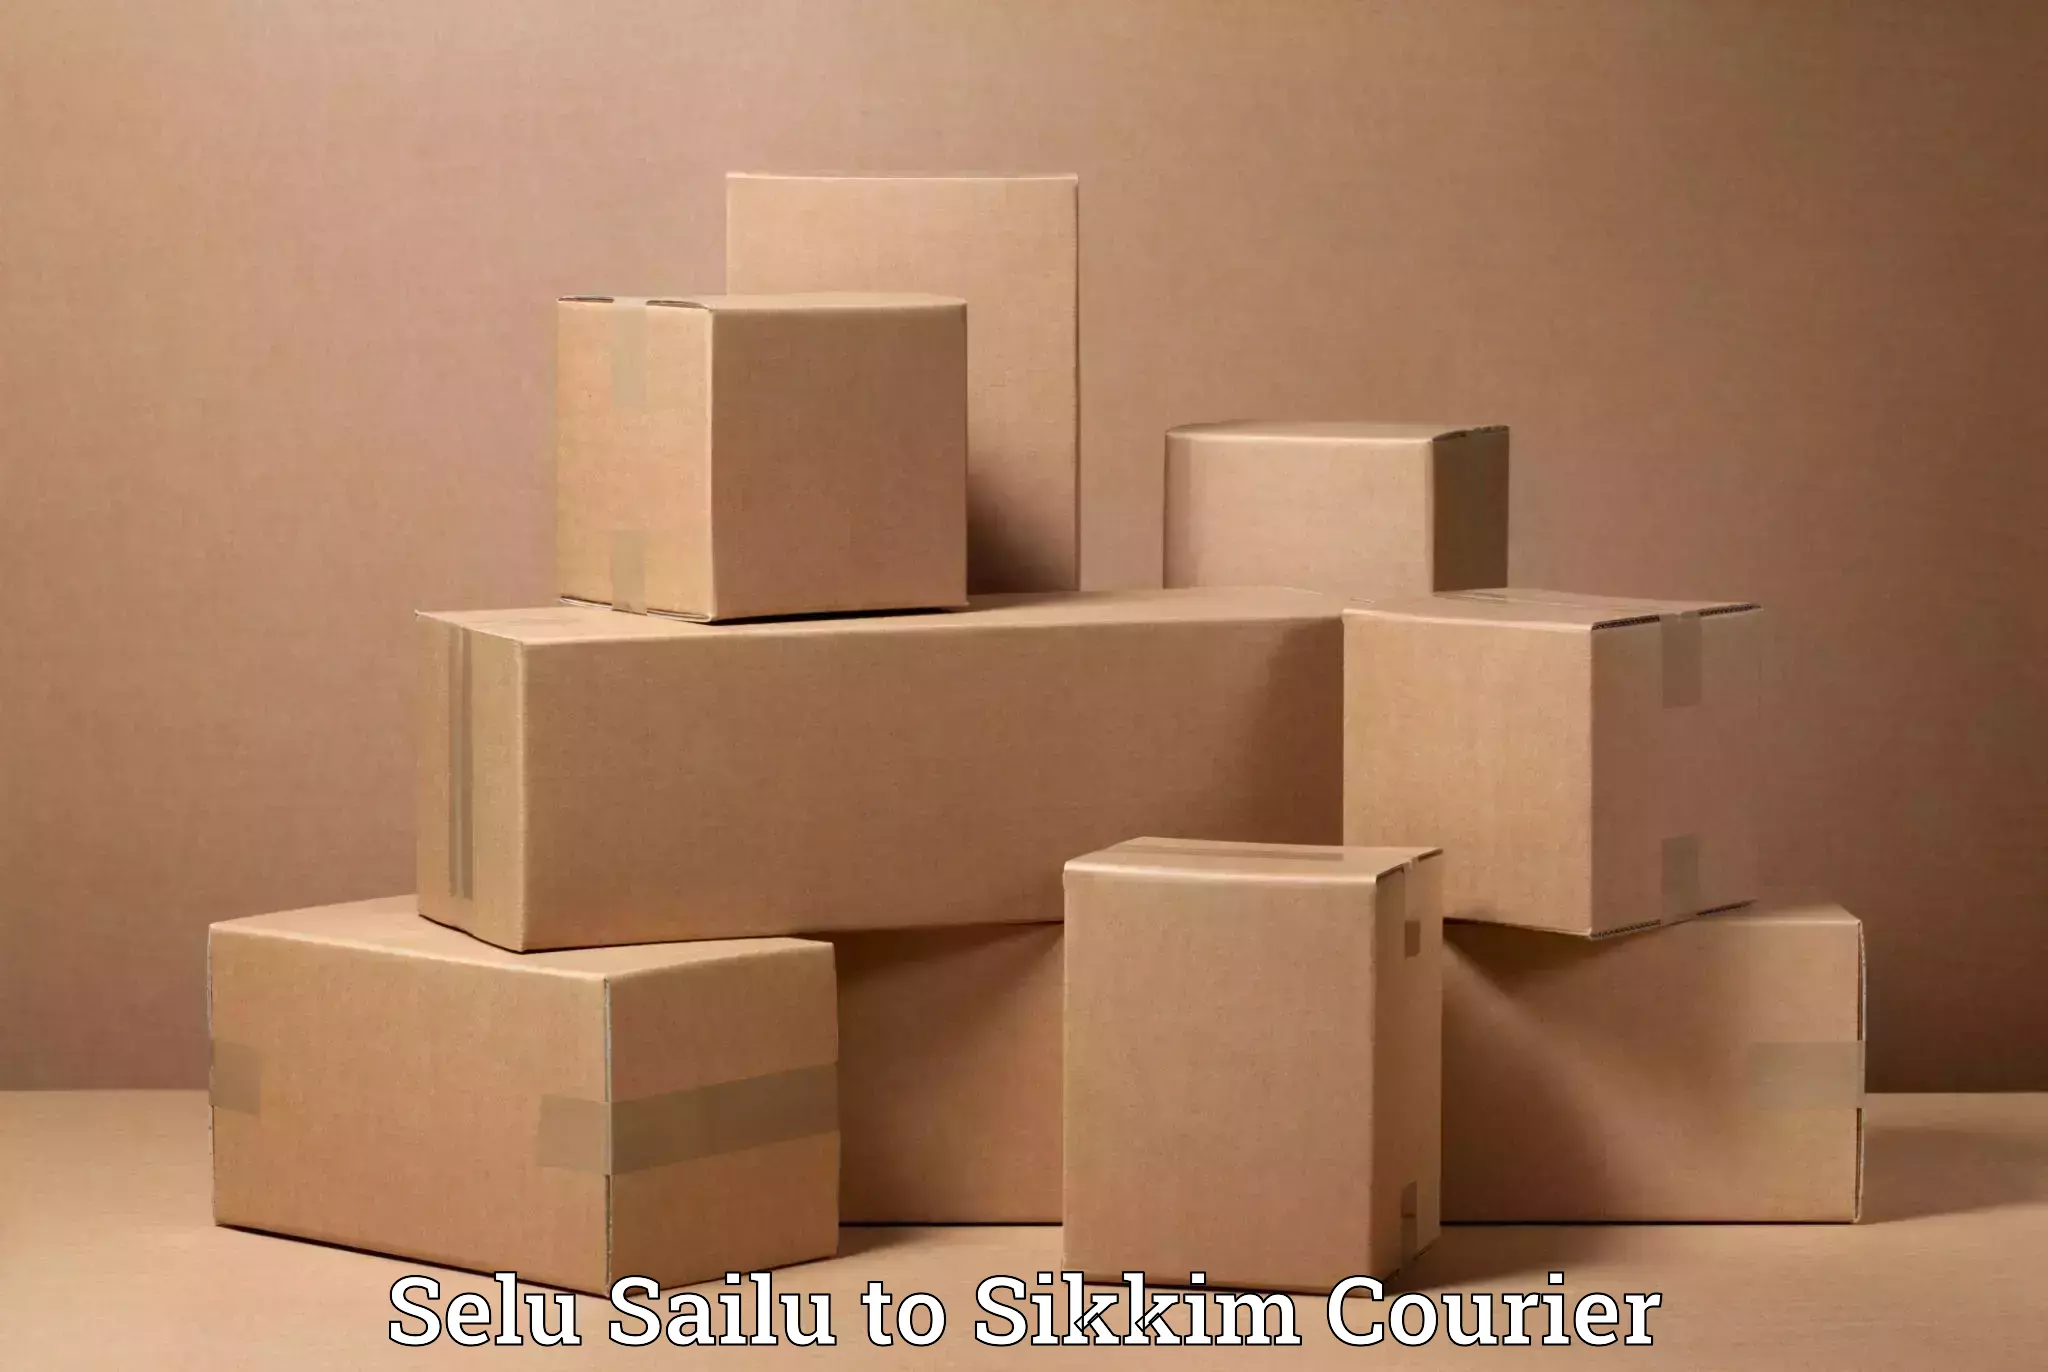 Home goods moving company Selu Sailu to South Sikkim